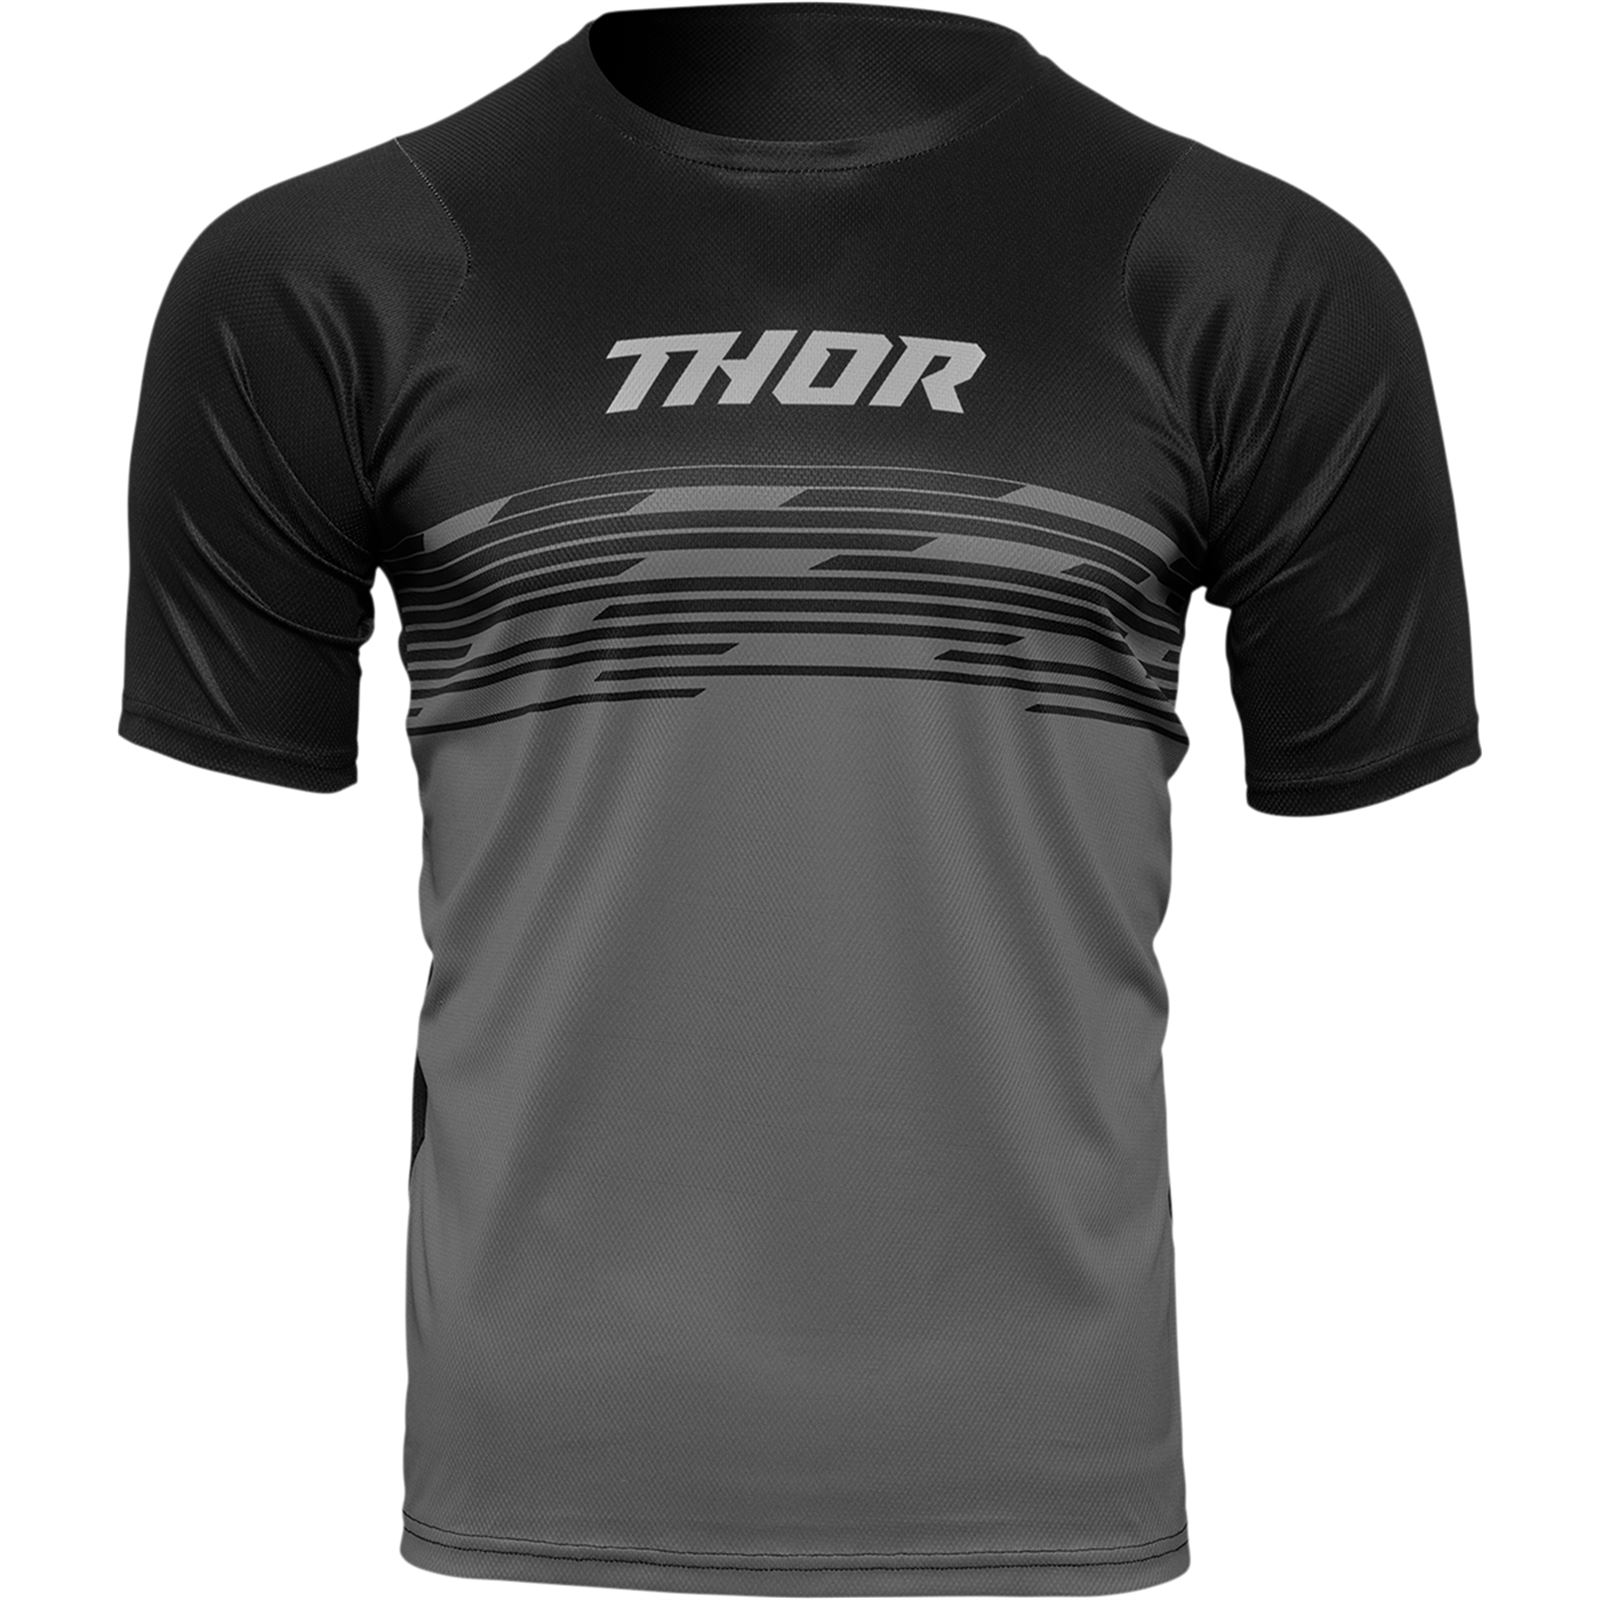 Thor Assist Shiver Jersey - Black/Gray - Medium